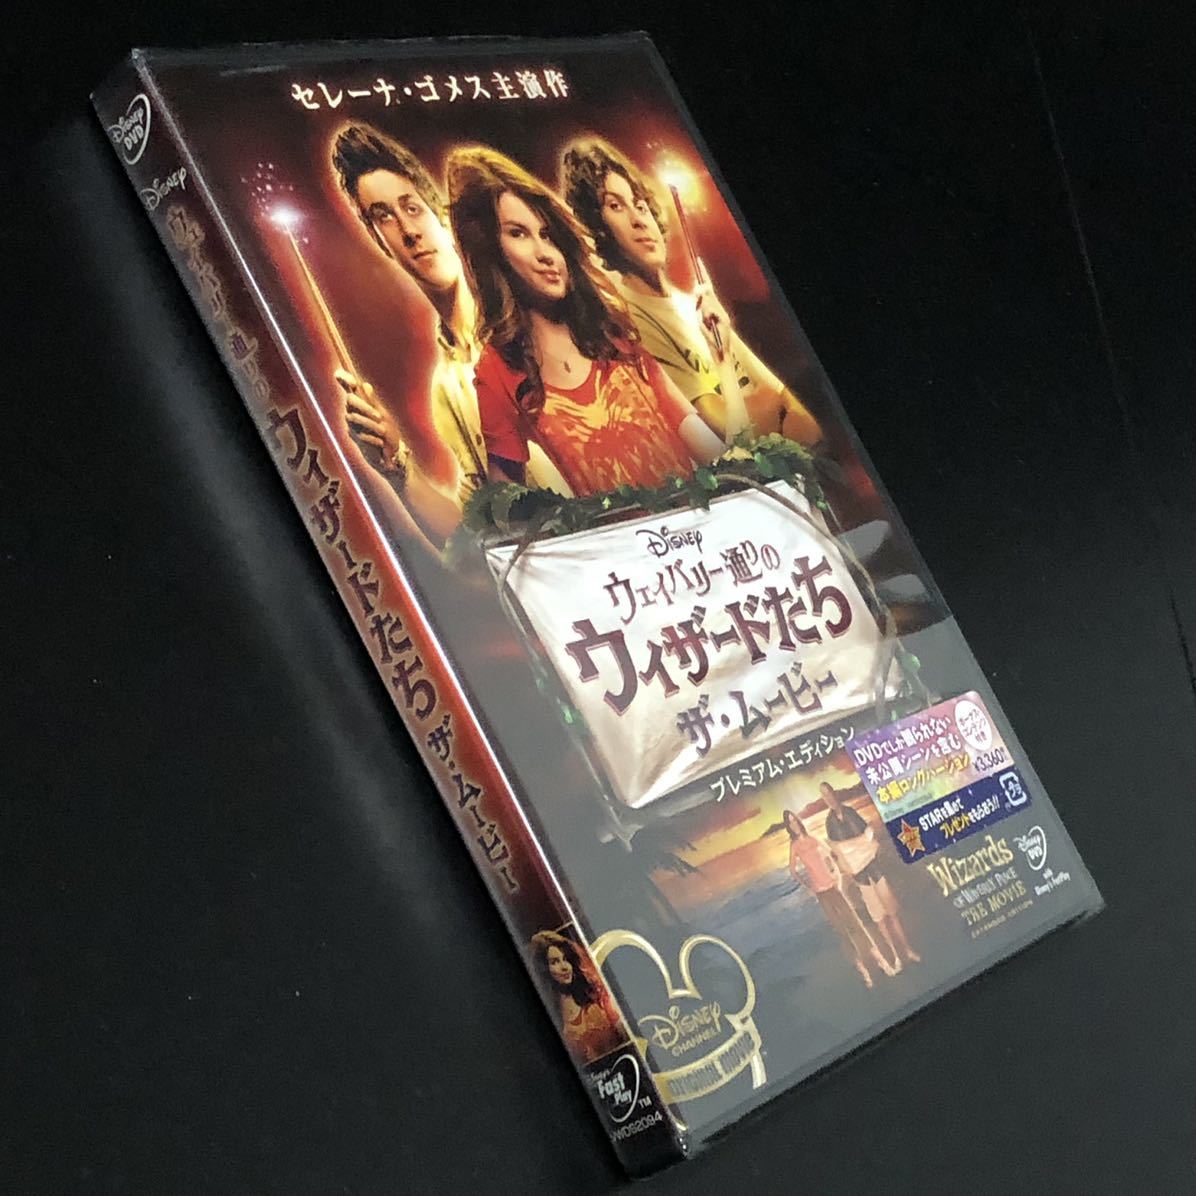 . record *DVD[ way Bally according. Wizard .. The * Movie premium * edition ]* unopened new goods / sele na*go female / Disney Disney